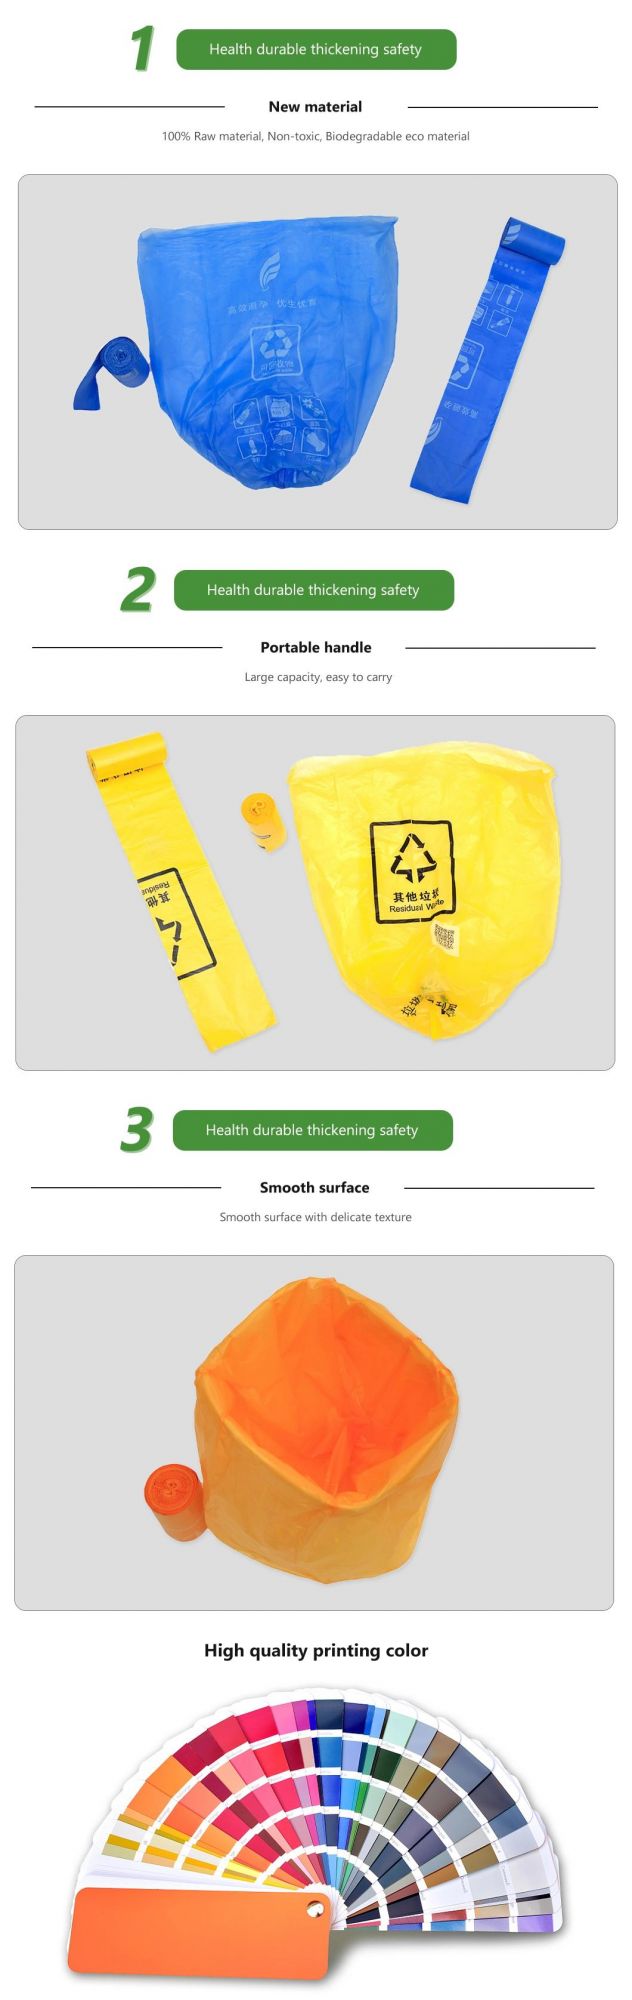 PLA+Pbat/Pbat+Corn Starch Biodegradable Bags, Compostable Bags, Garbage Bags for School